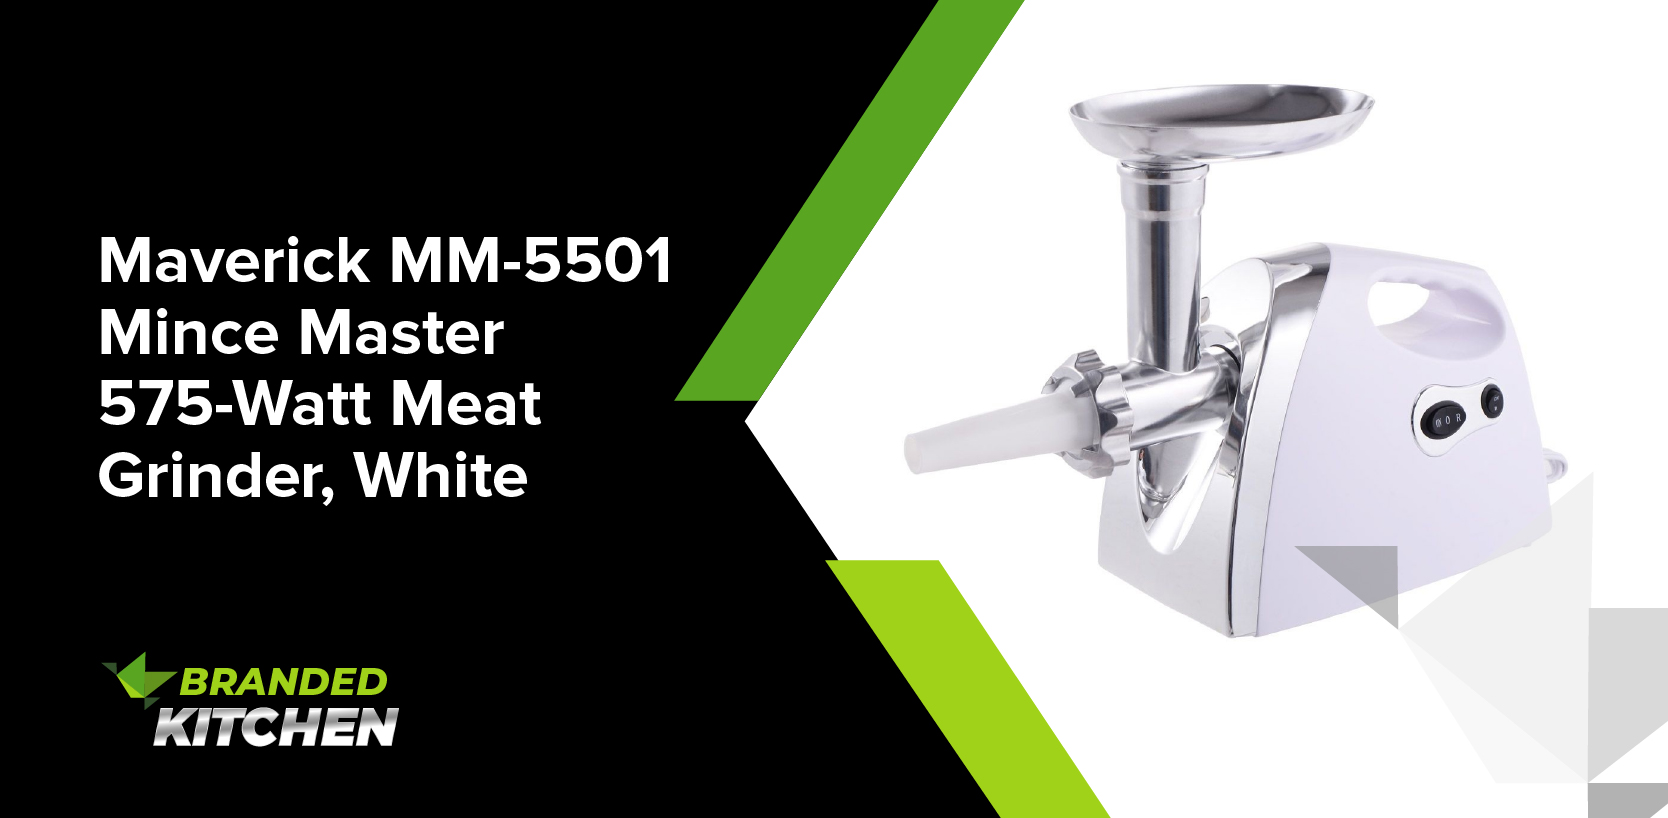 Maverick MM-5501 Mince Master 575-Watt Meat Grinder, White